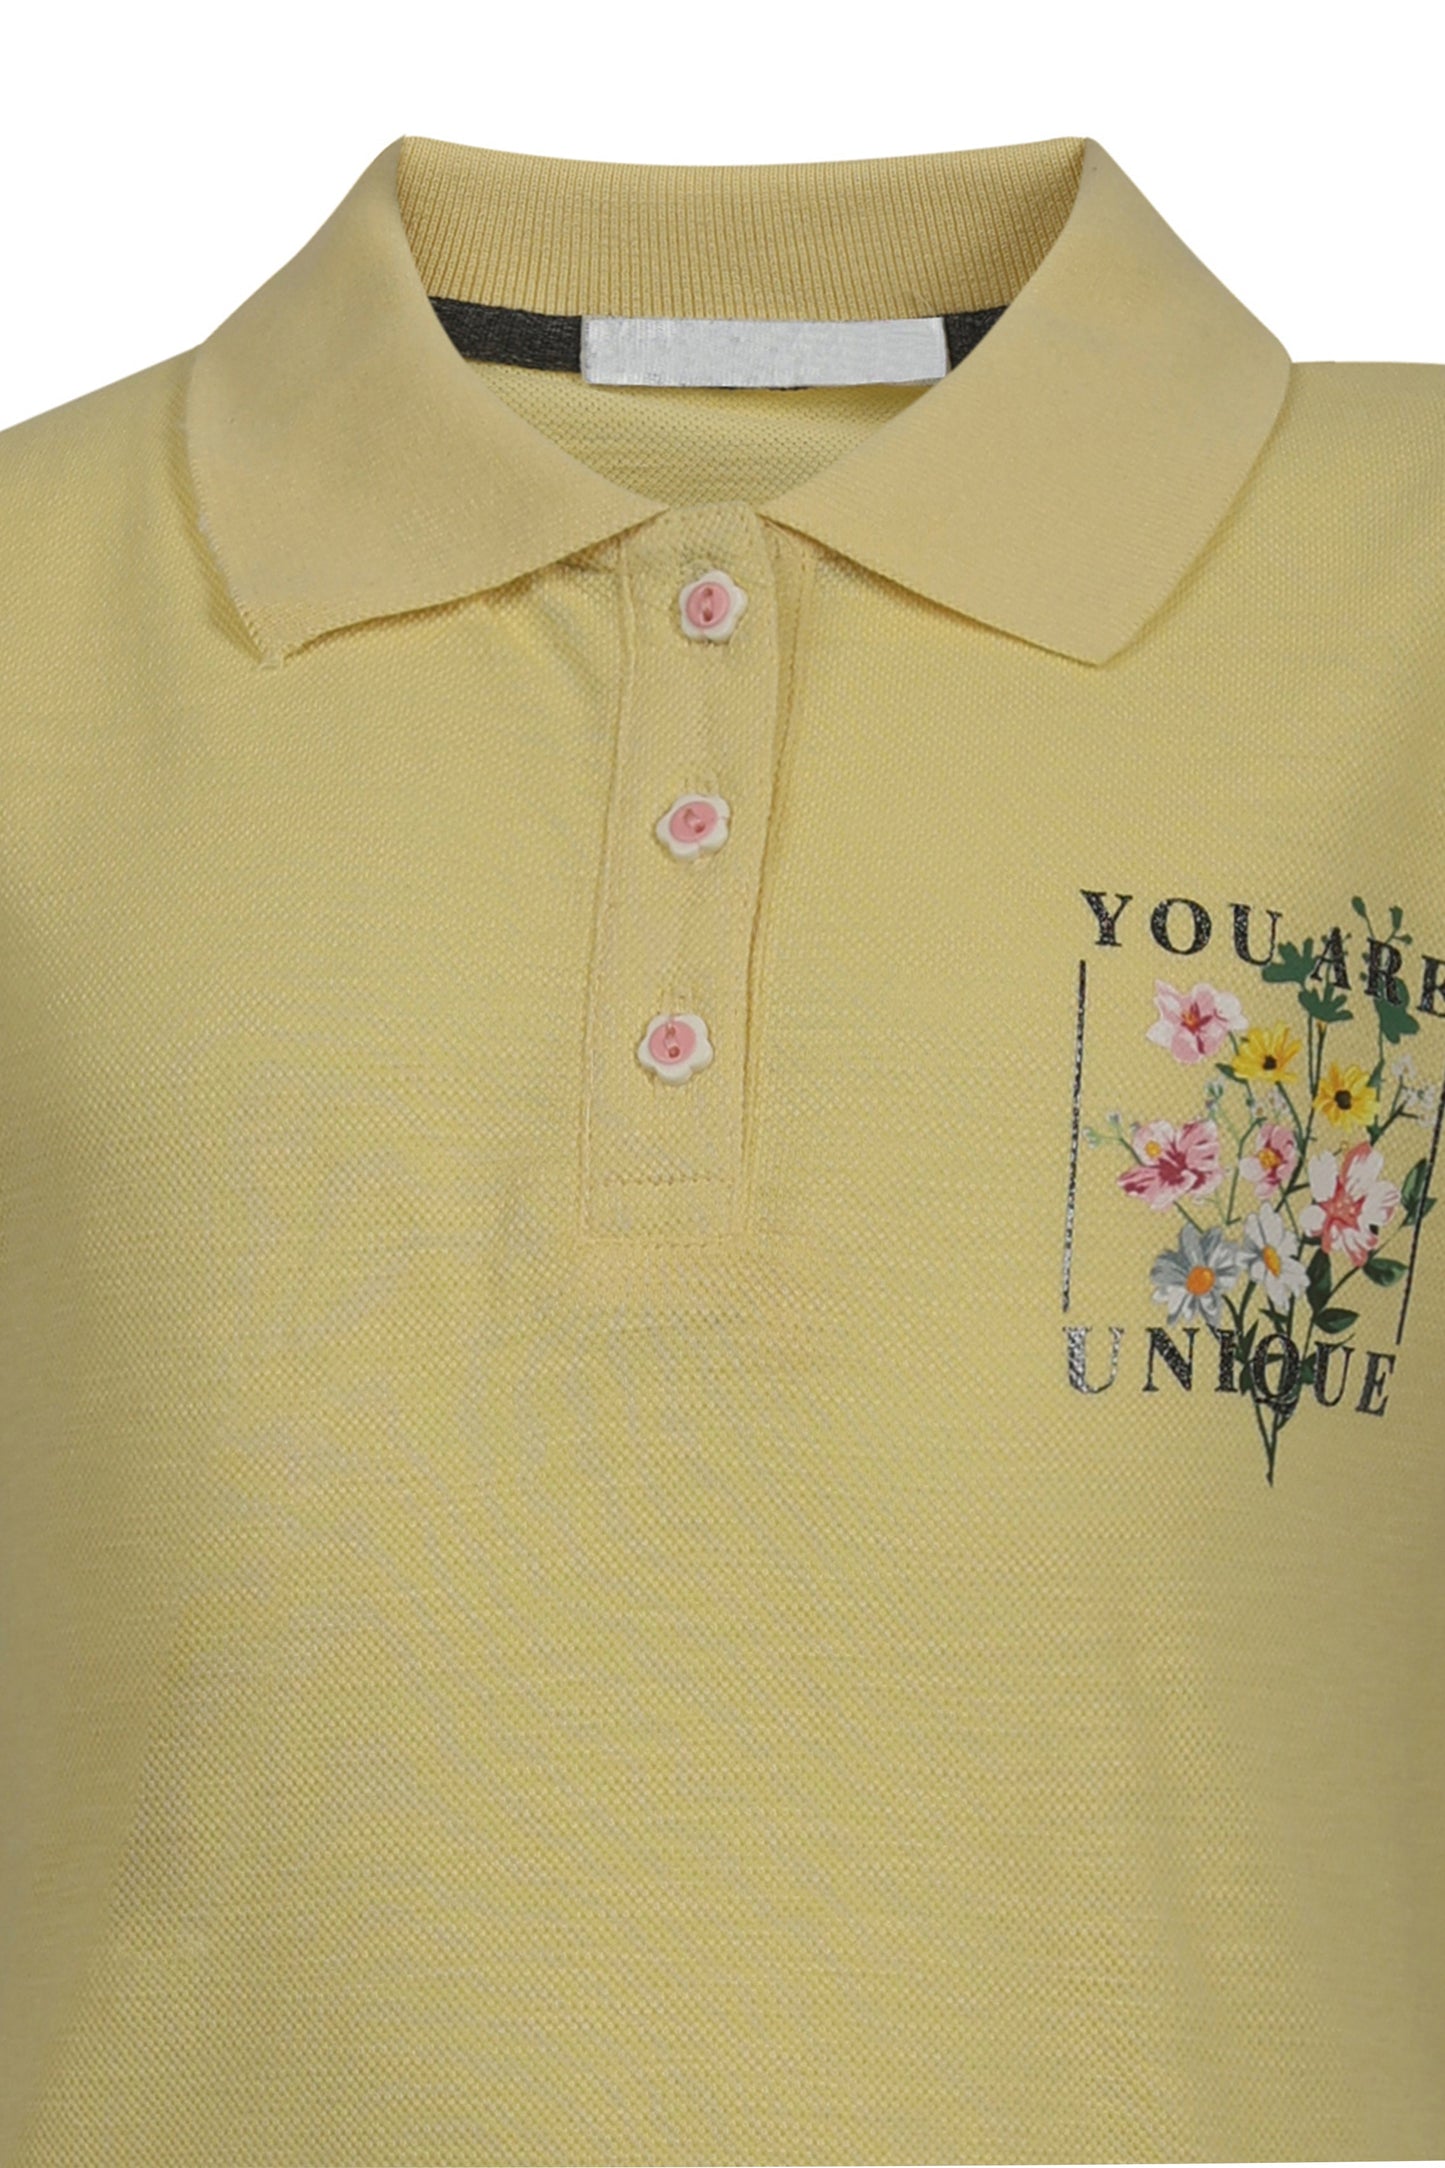 Pampolina Girls  Sequined Printed Pique Kint Collar T-Shirt - Lemon